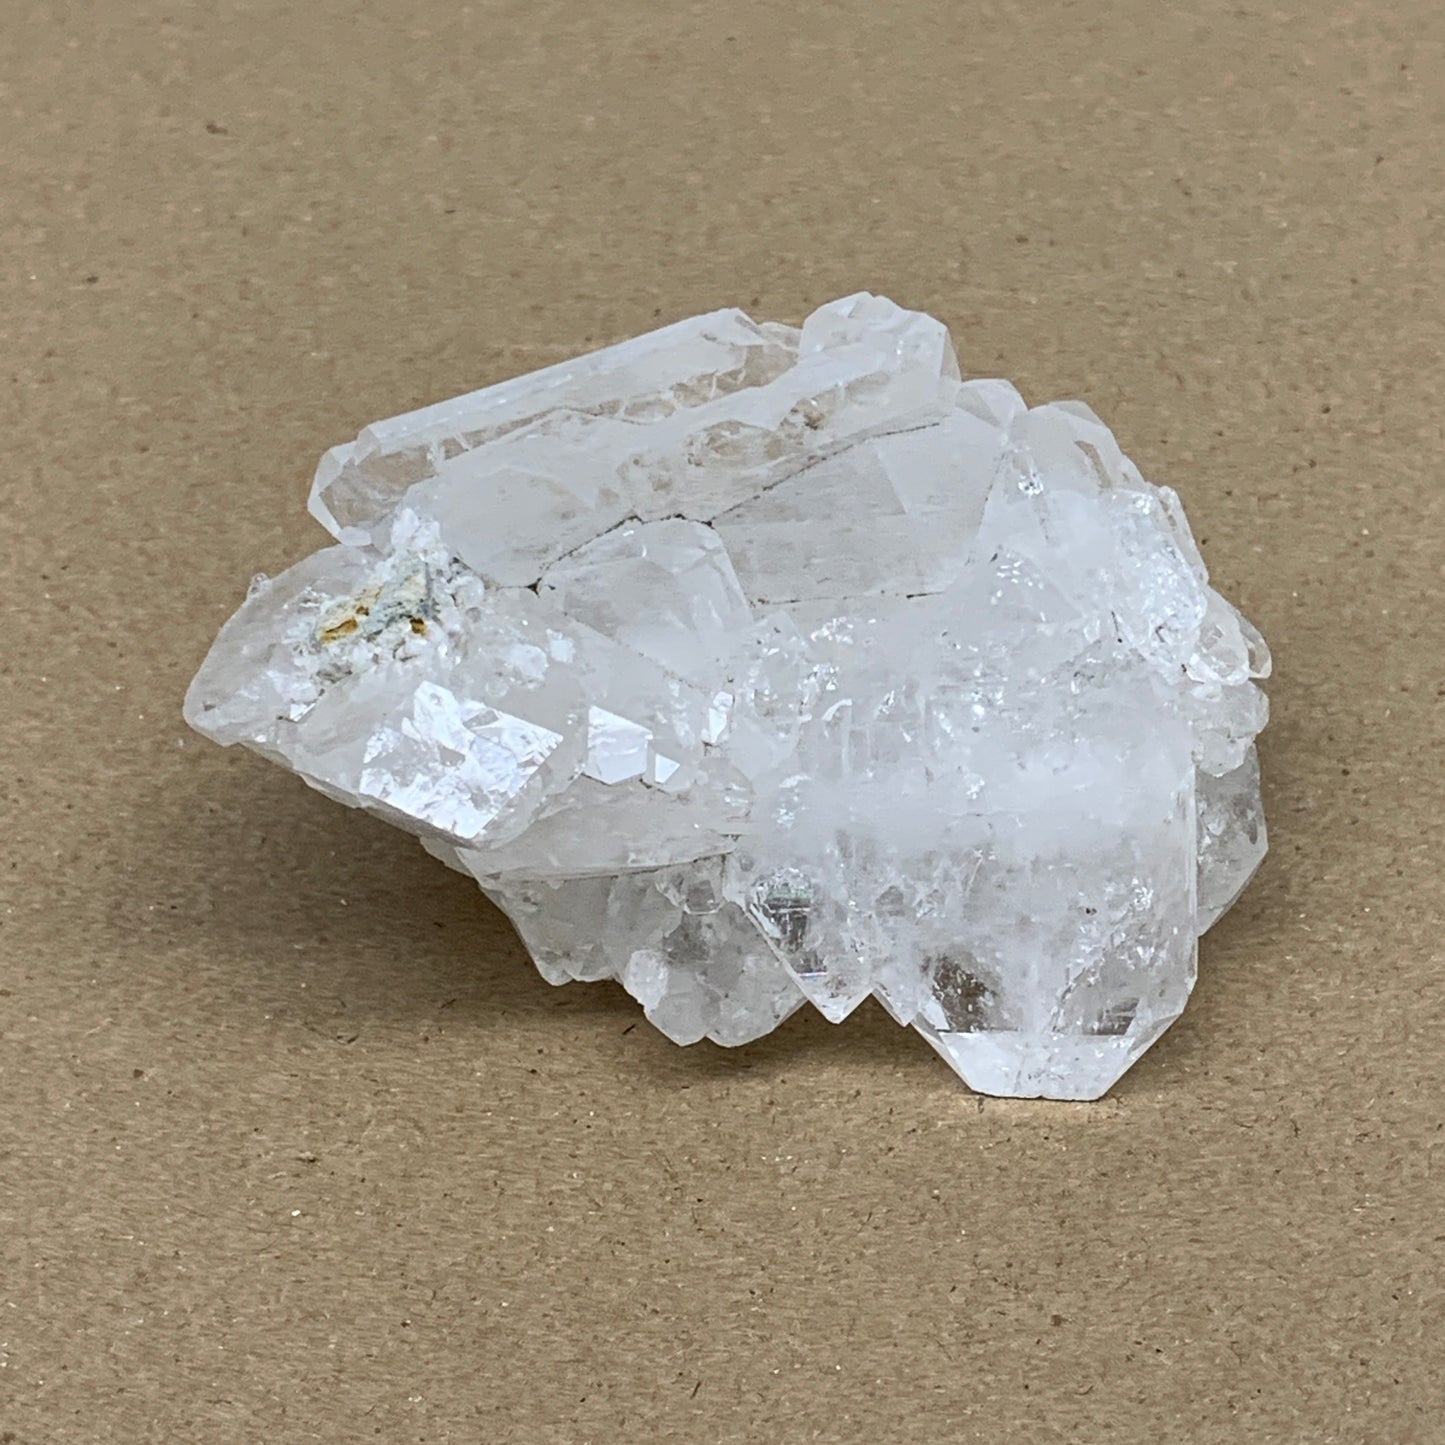 108.2g, 2.9"x2.1"x1.6", Faden Quartz Crystal Mineral,Specimen Terminated, B24948